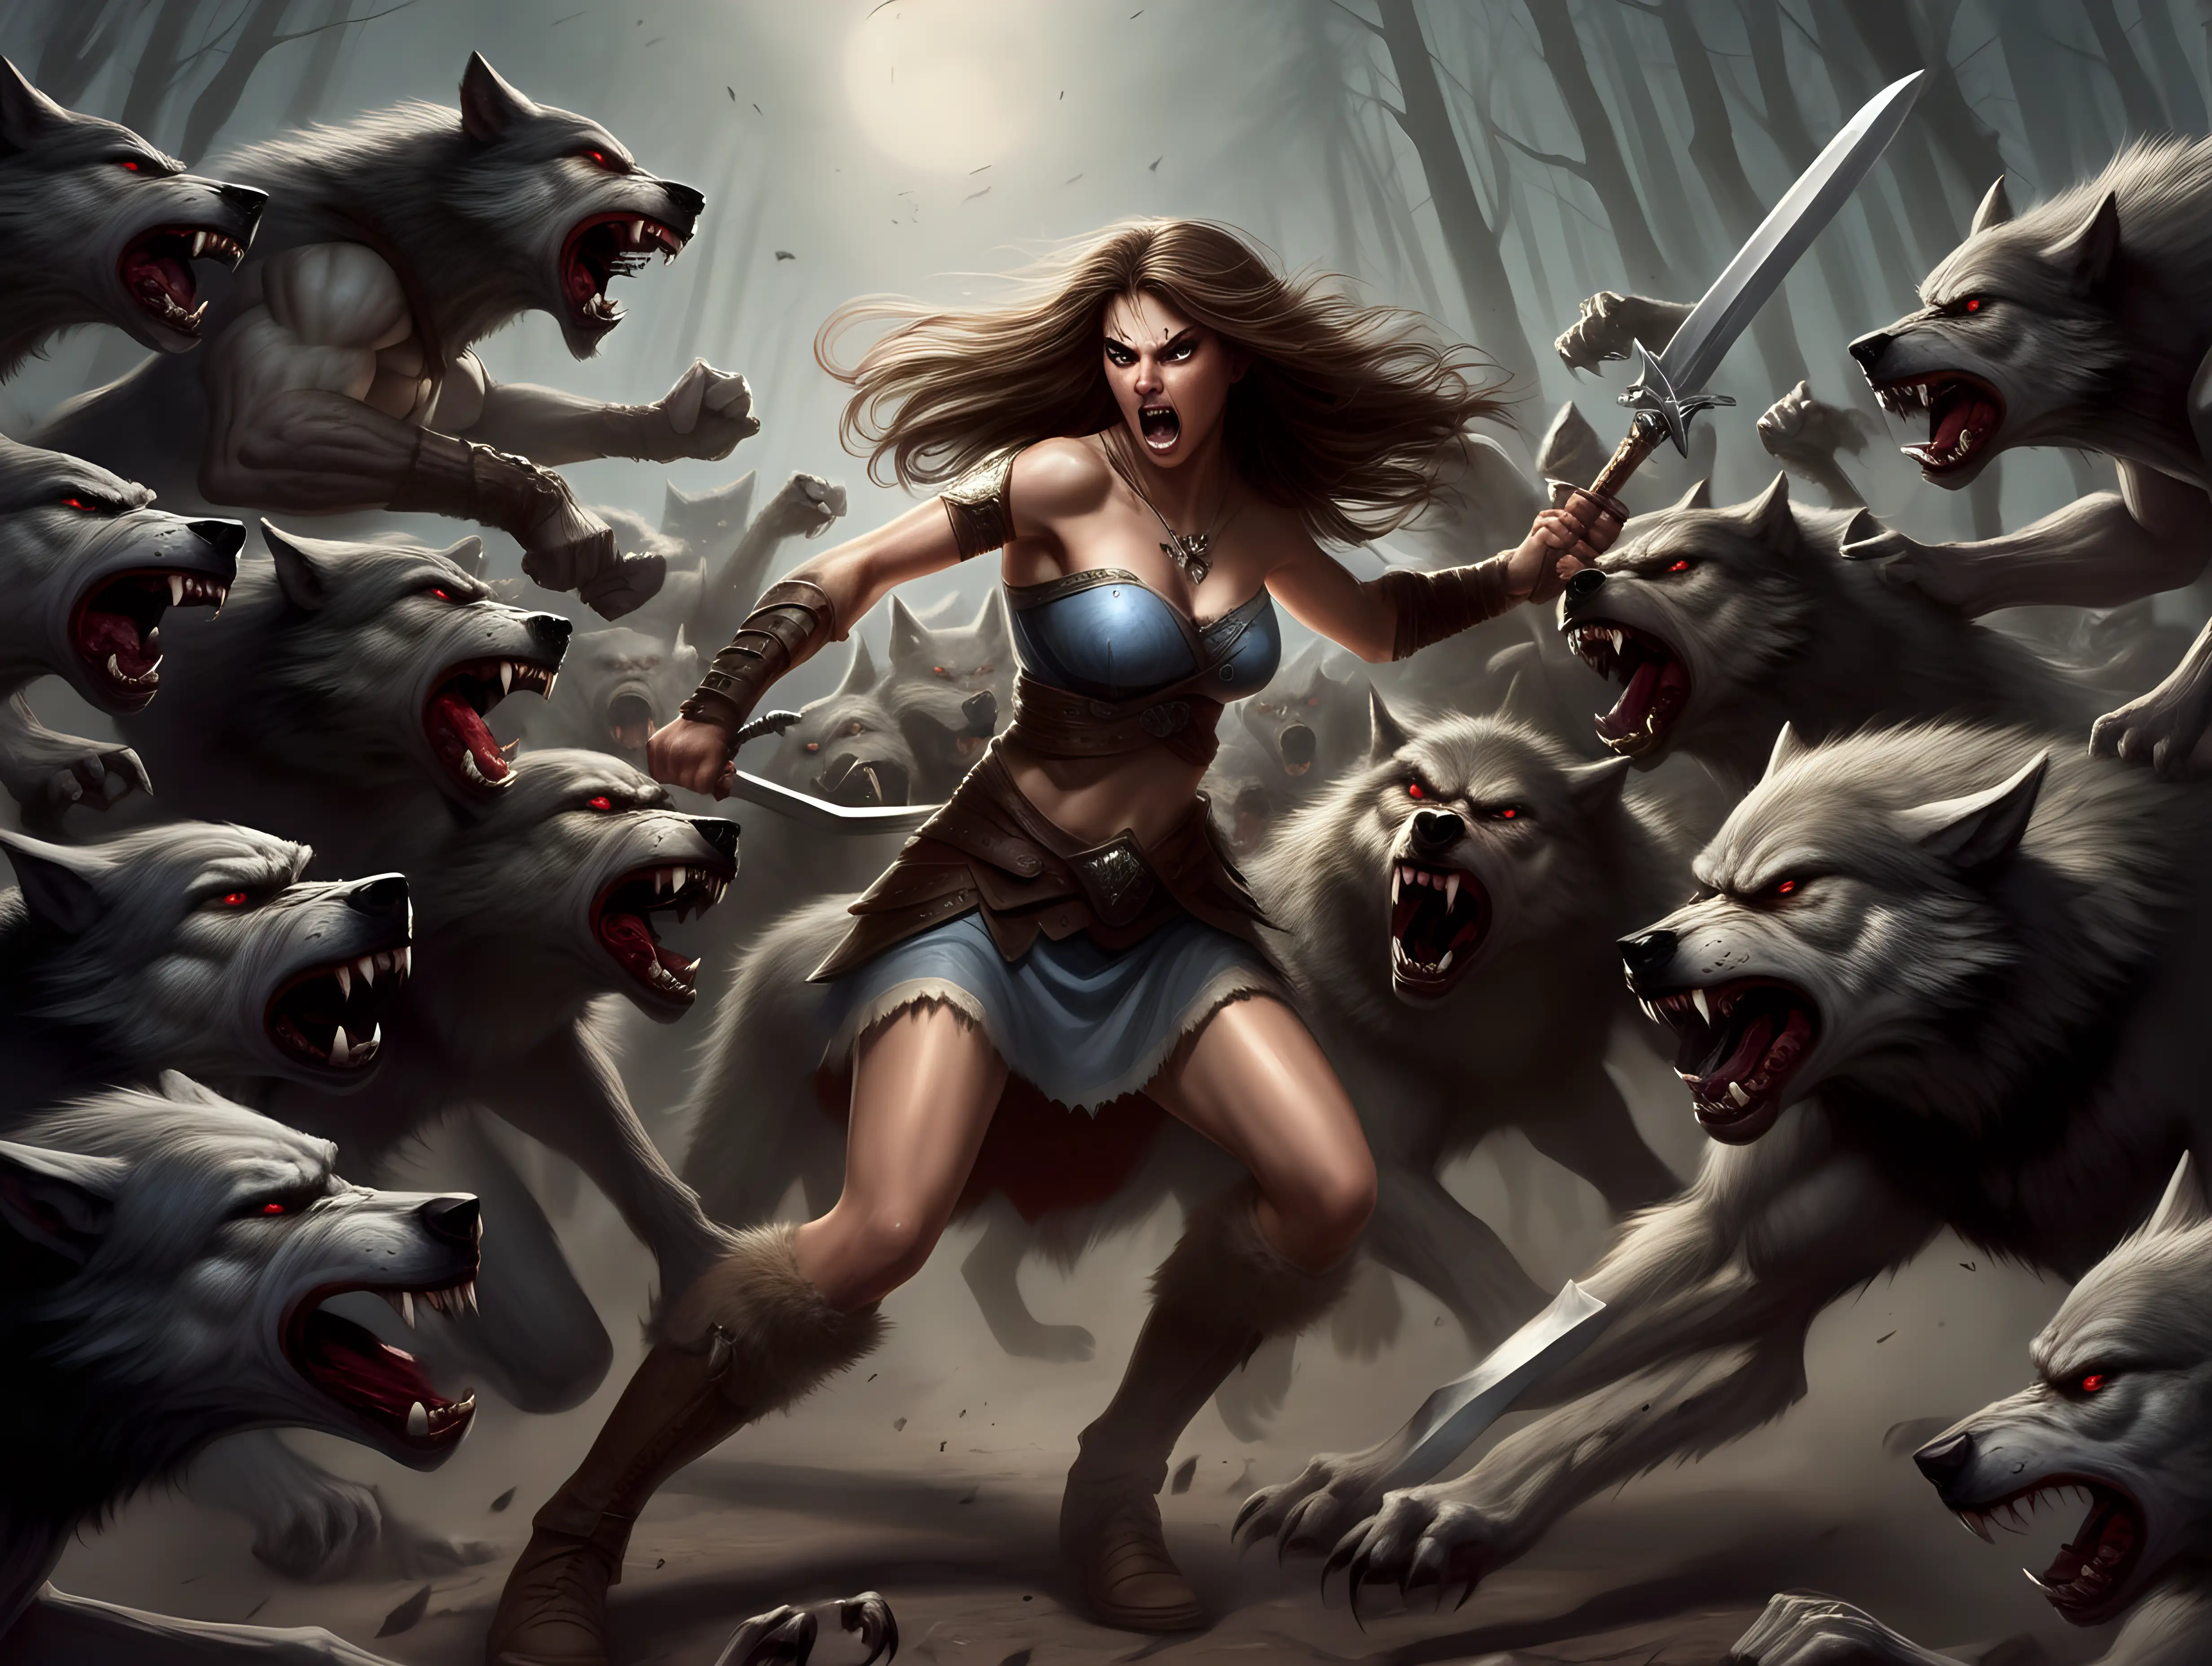 Courageous Warrior Princess Battling Werewolf Horde